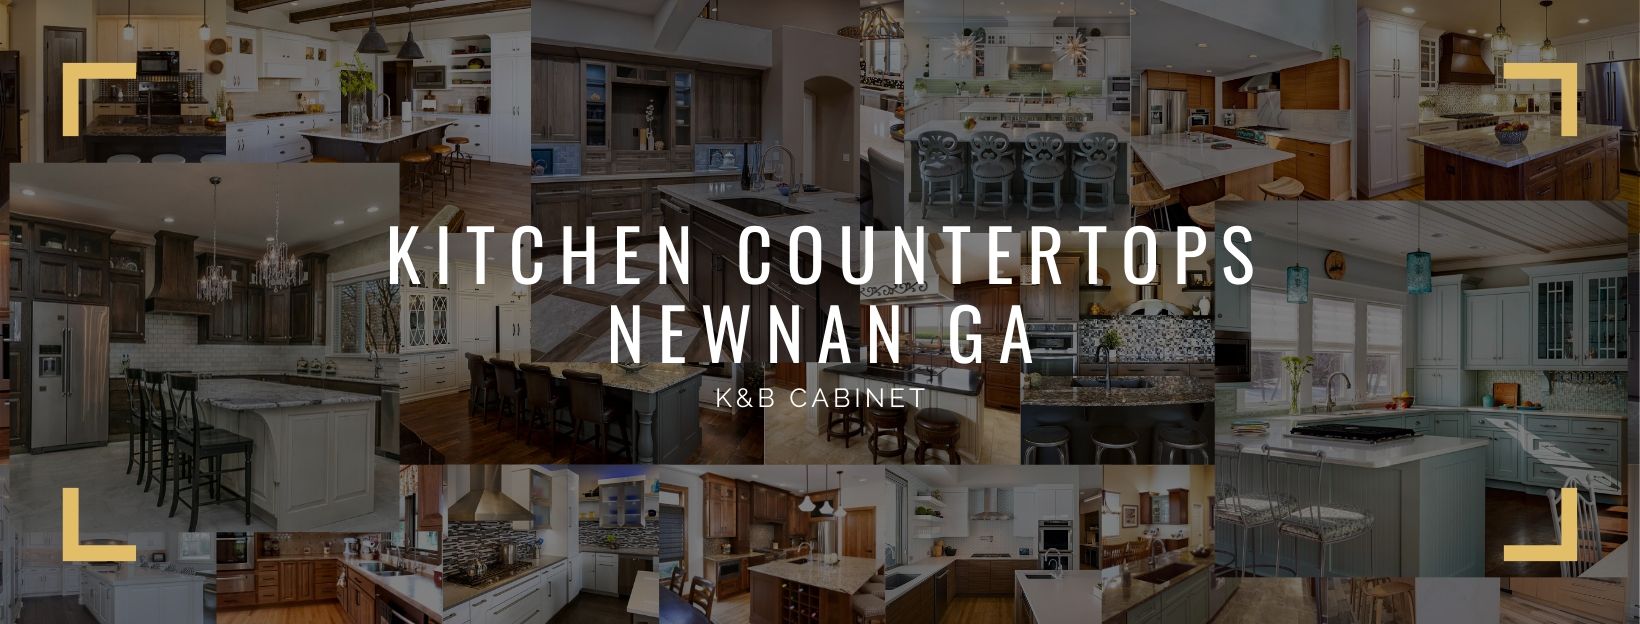 Kitchen Countertops Newnan GA | Kitchen Countertops Company Near Me